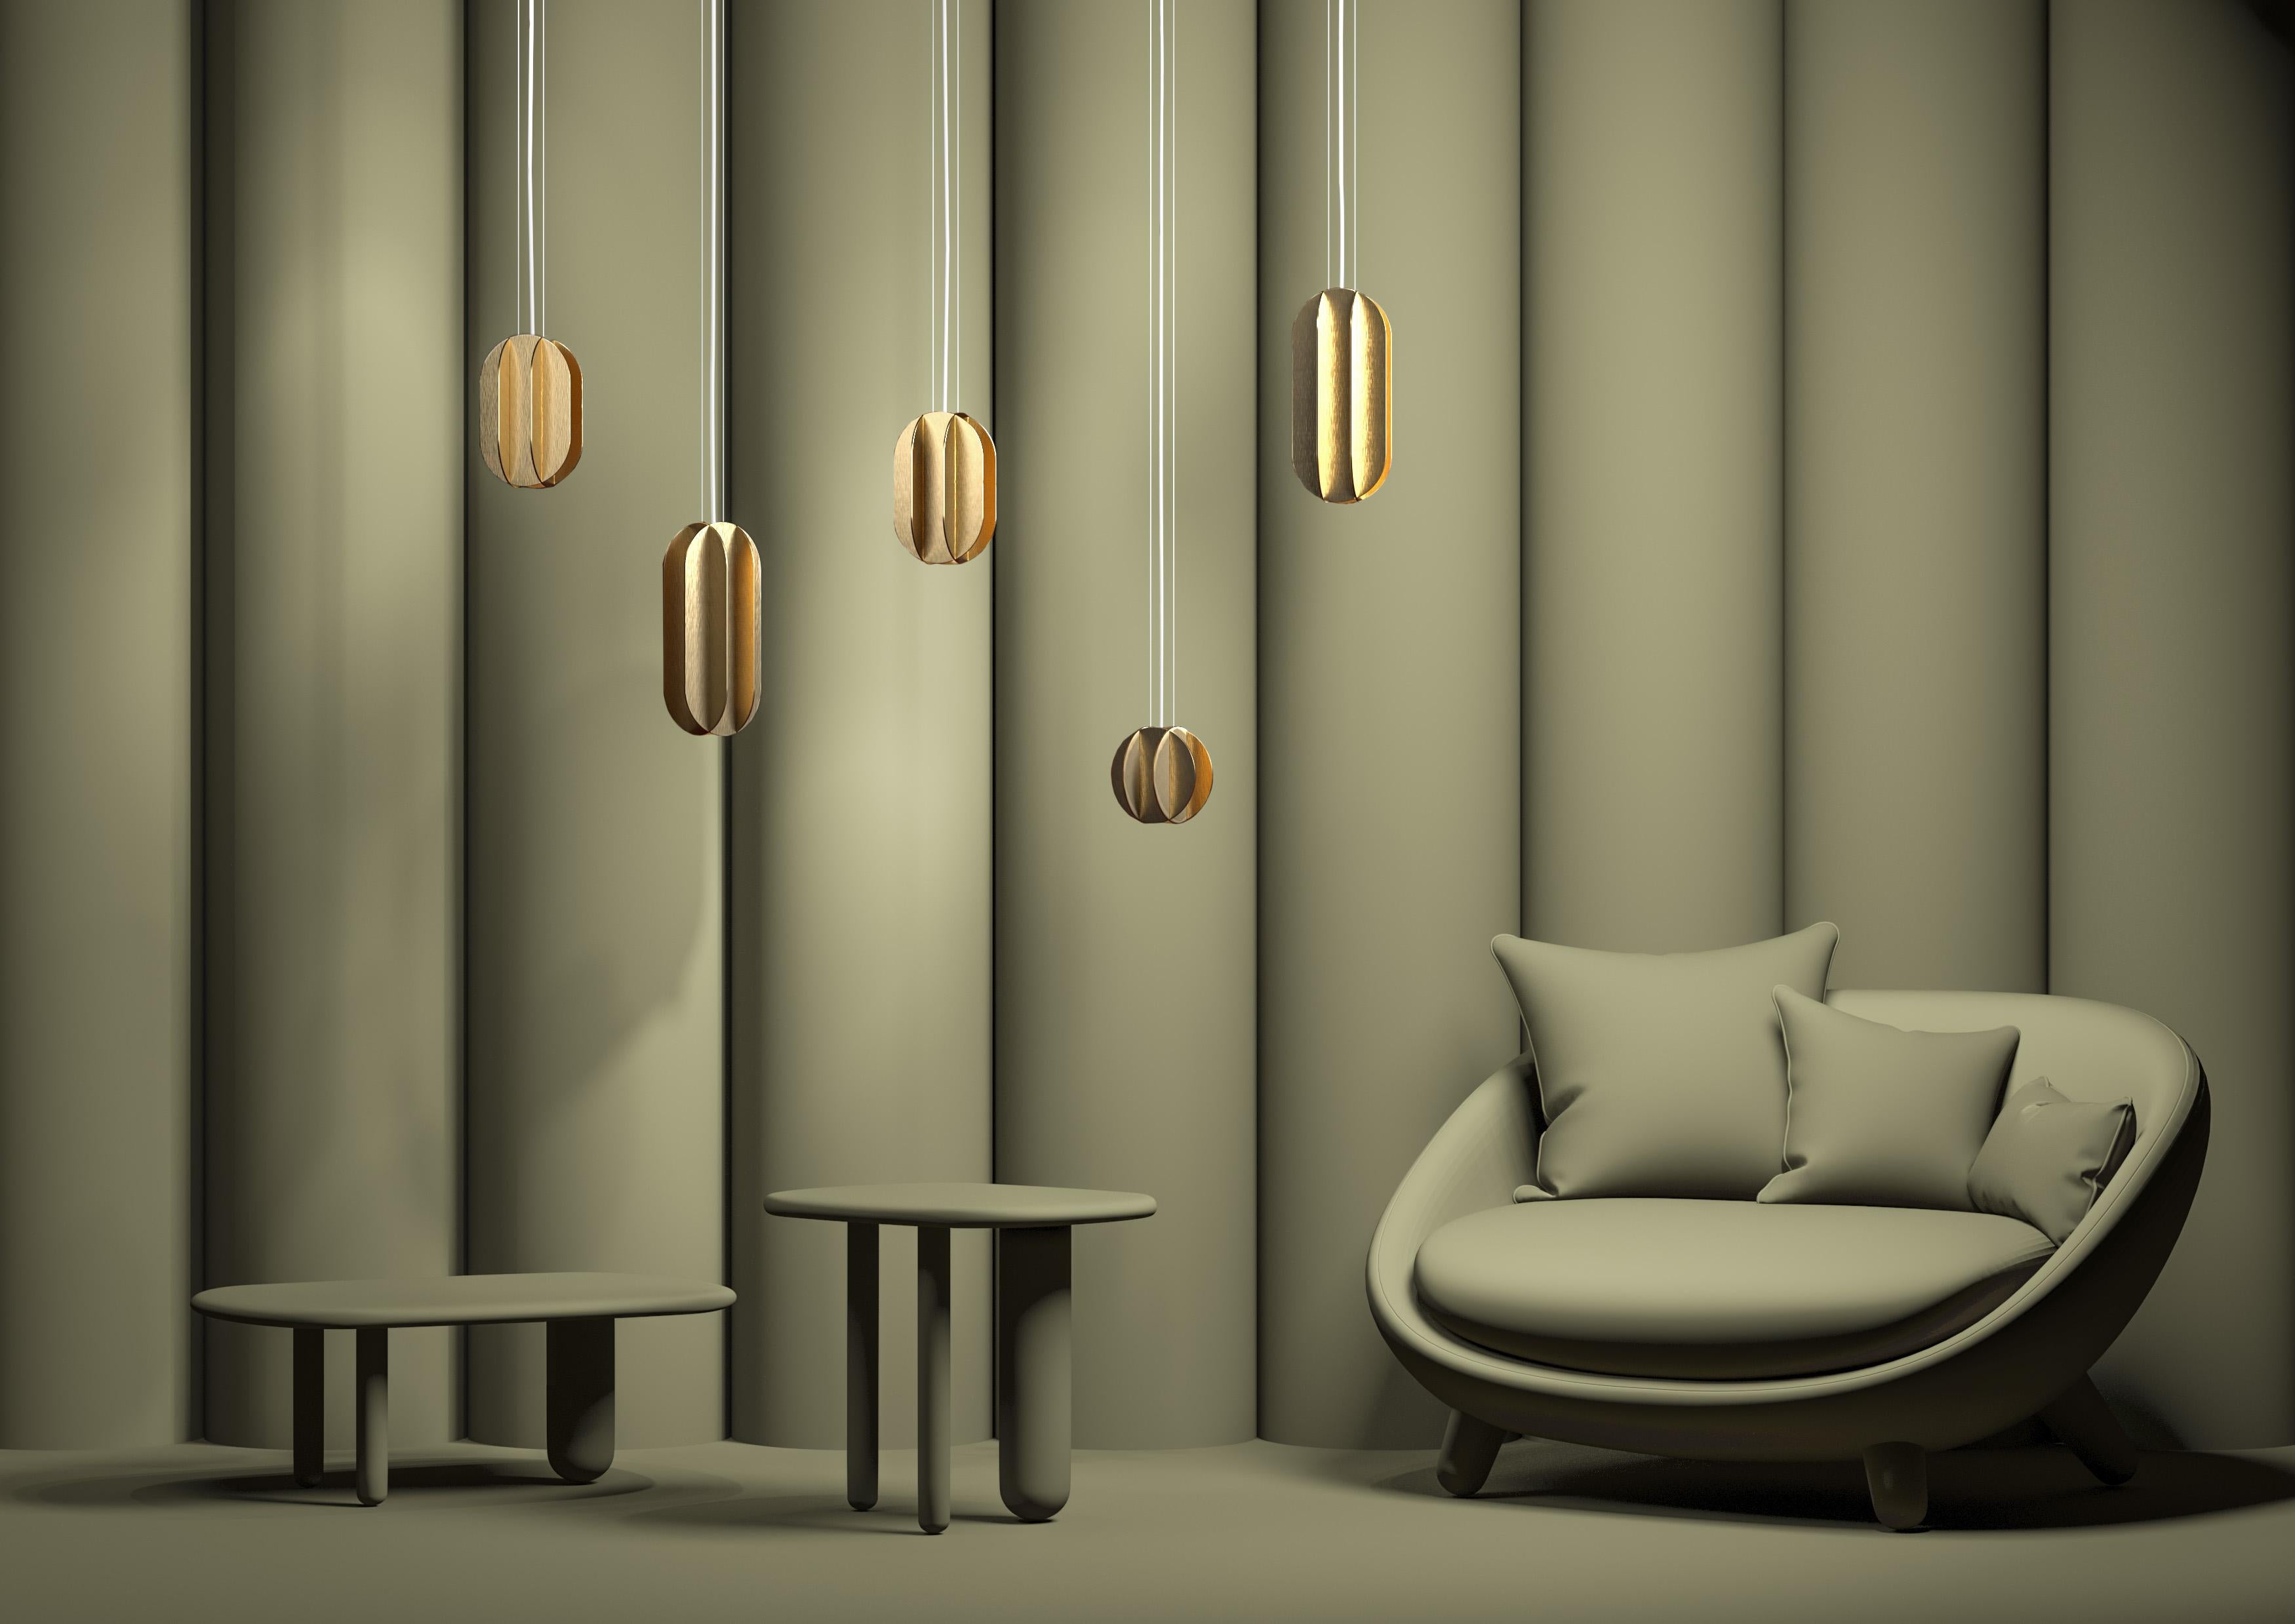 Ukrainian Set of Three Contemporary Pendant Lamp El Lamps CS1 by Noom in Brass